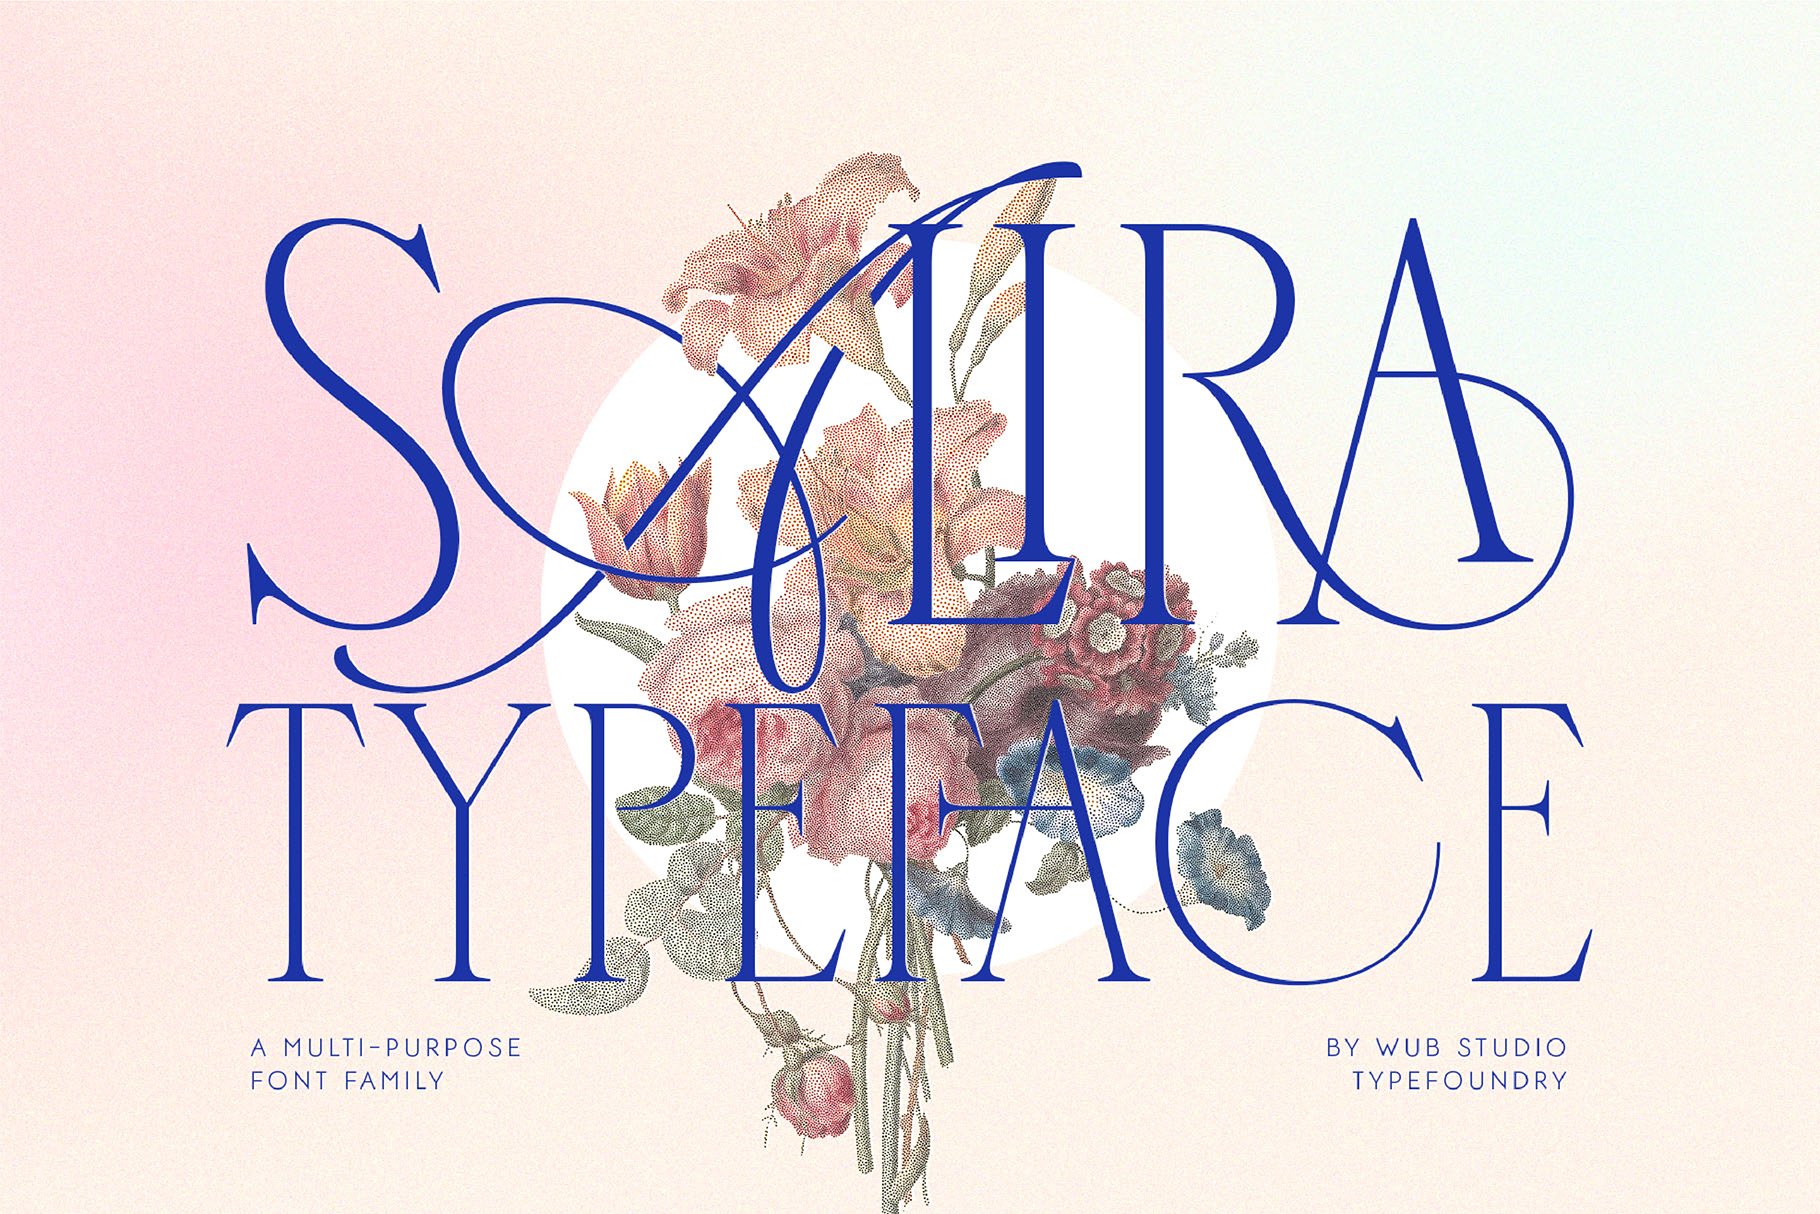 Salira Typeface cover image.